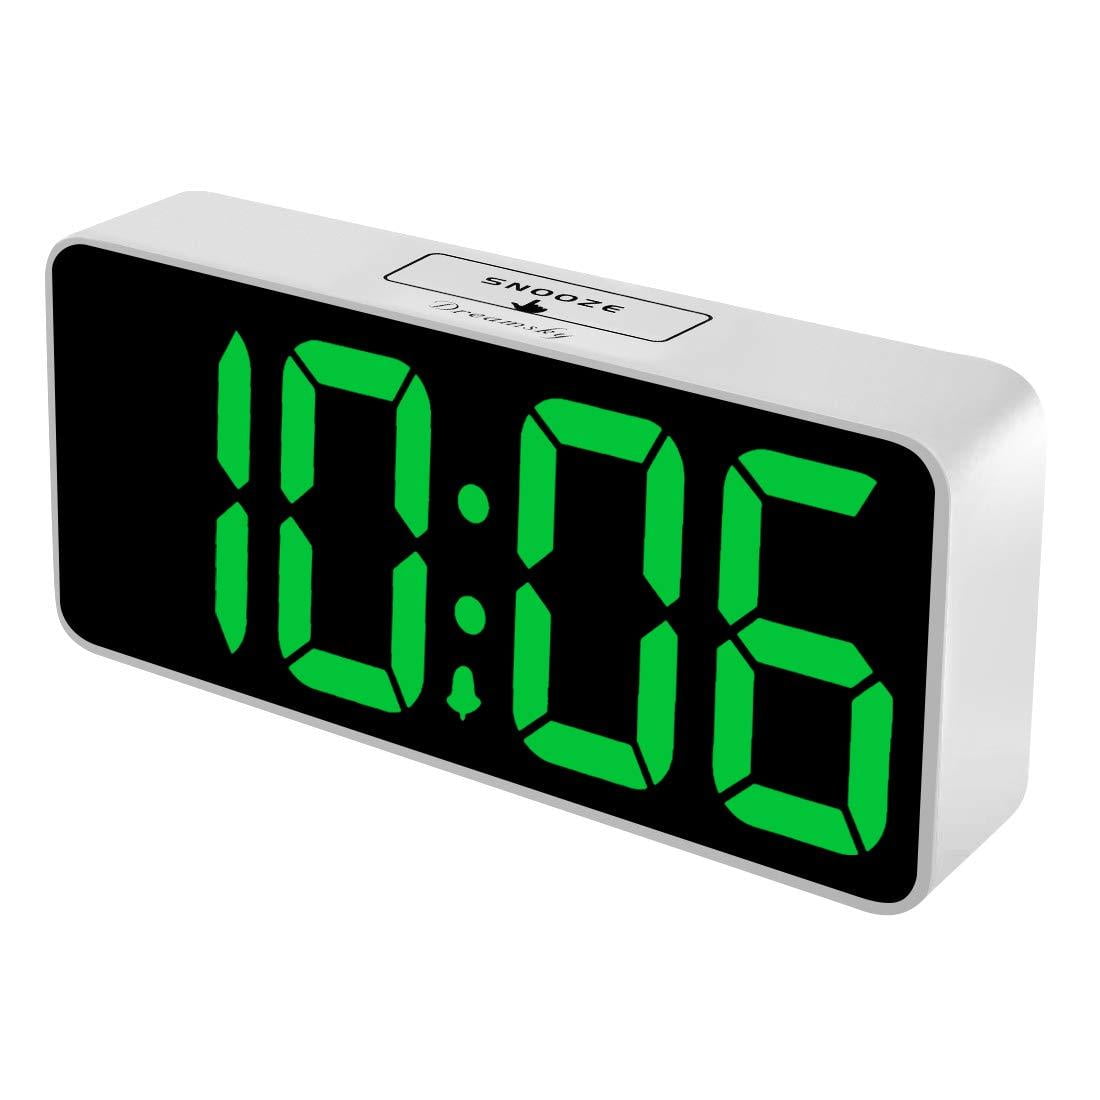 Large Number Digital LED Display with Dimmer Night Light USB Phon Alarm Clock 